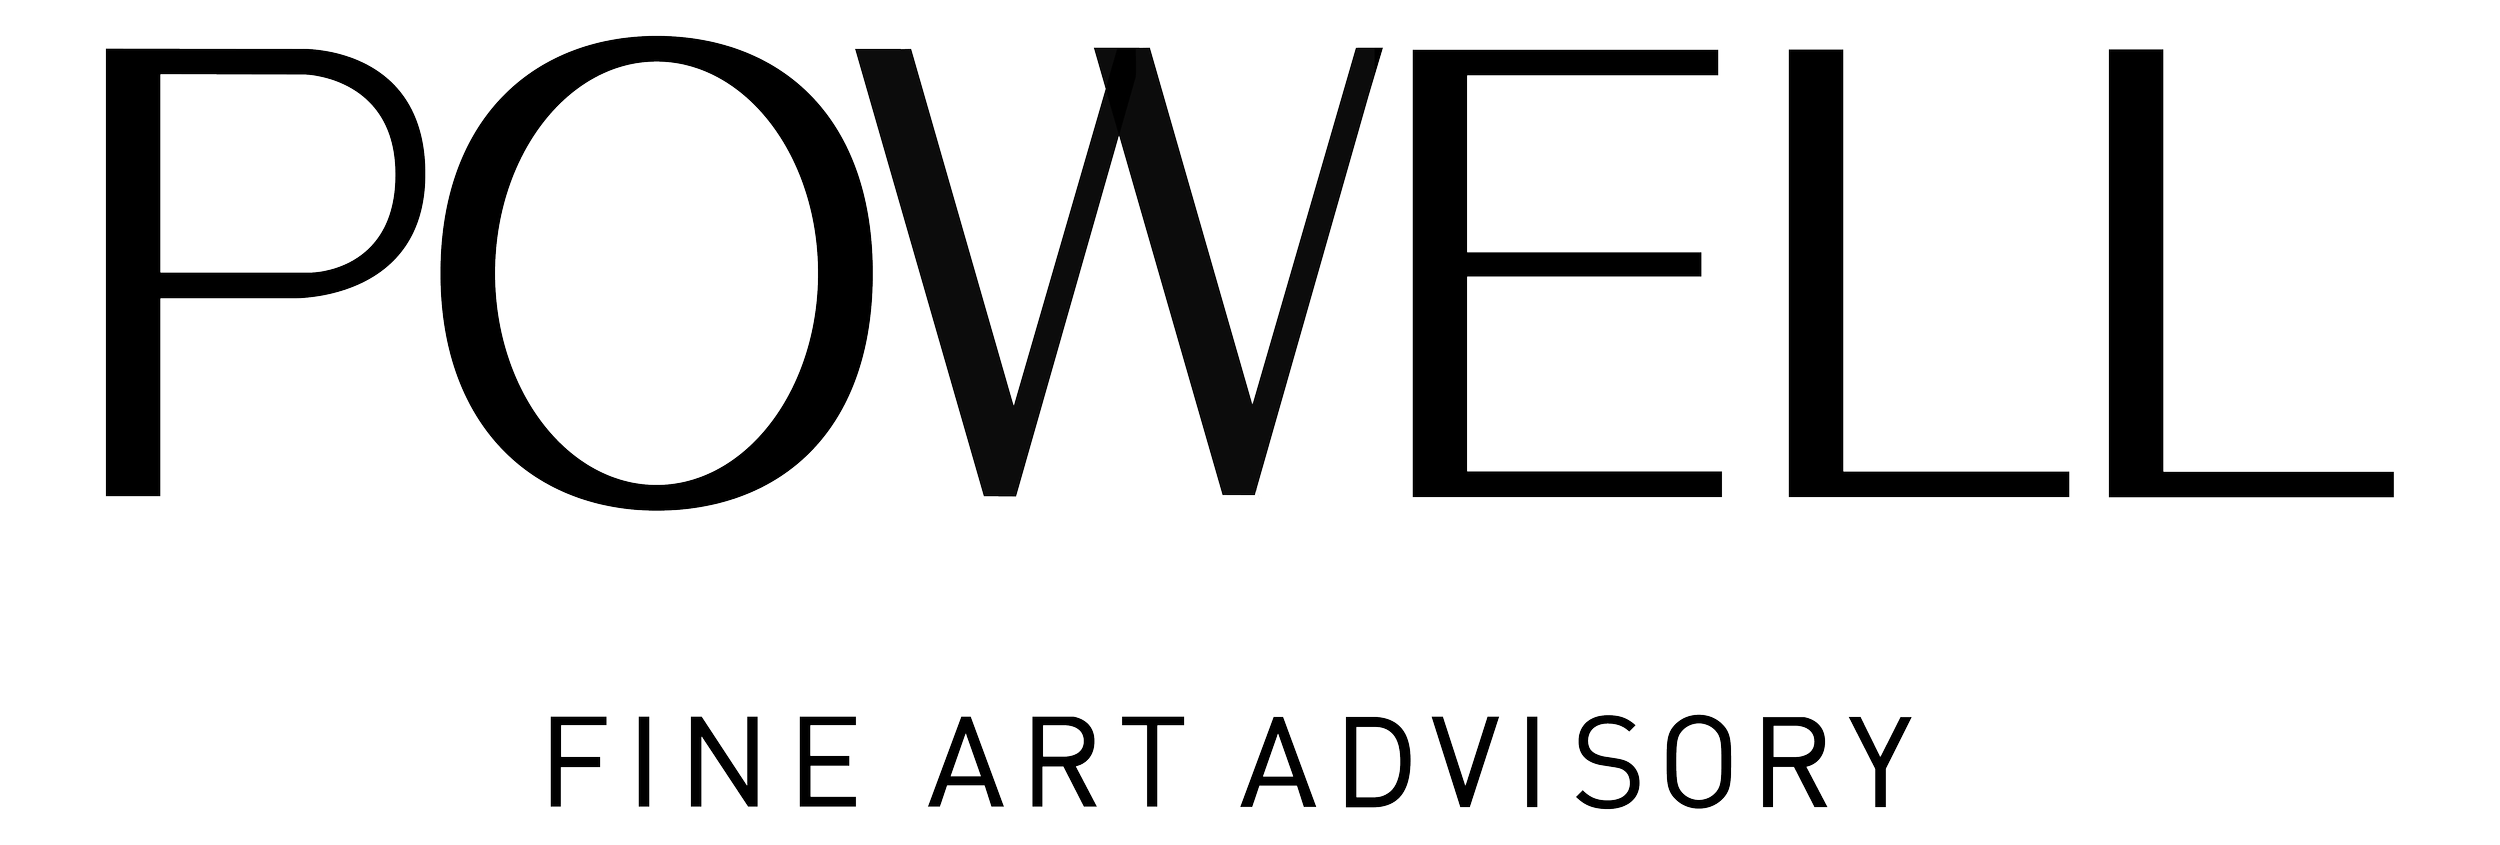  Powell Fine Art Advisory